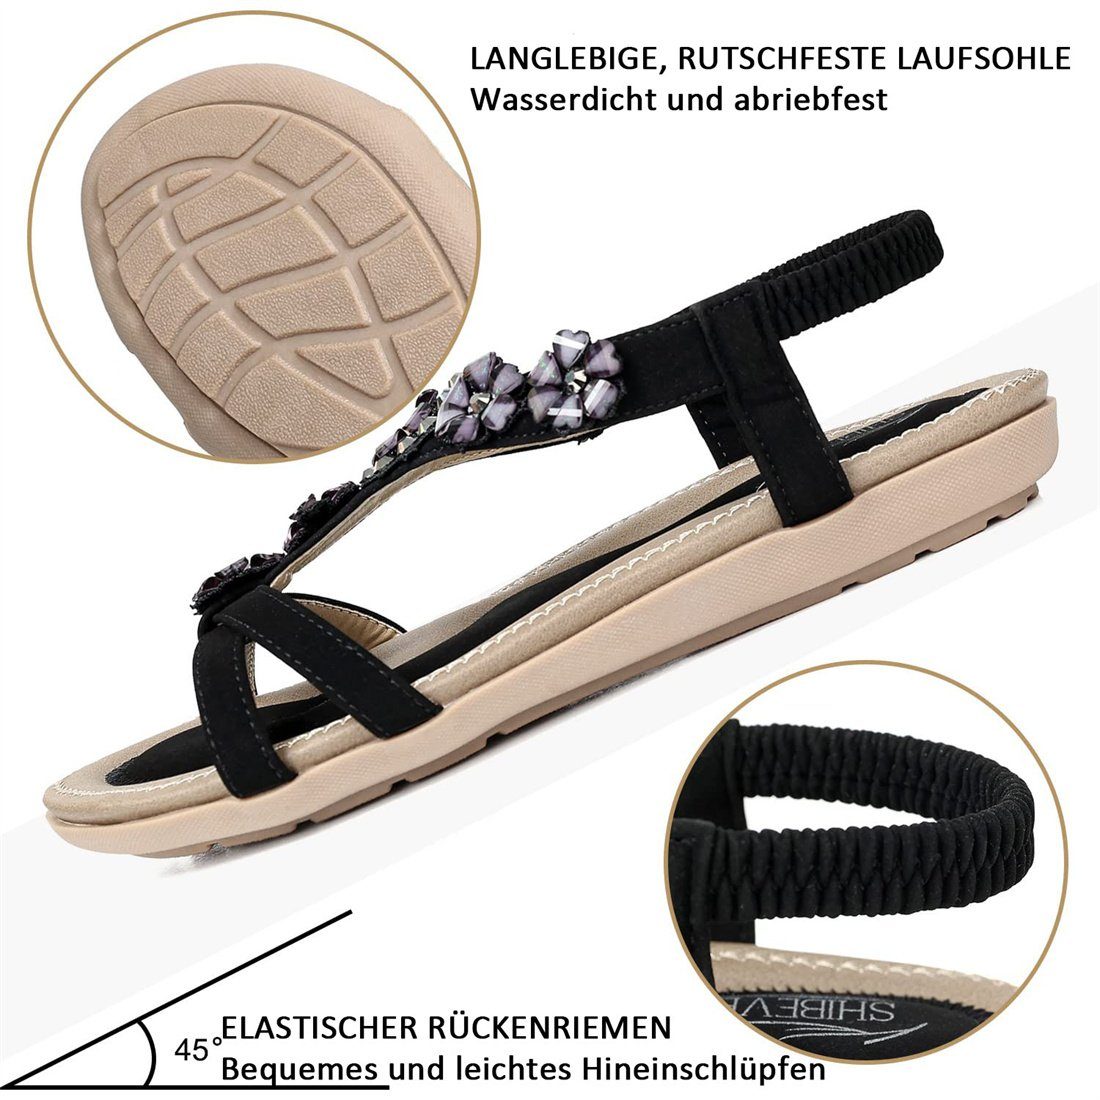 Strass-Sandalen, Schwarz flache Strandschuhe DÖRÖY für Frauen, Schuhe Bohemian Riemchensandale